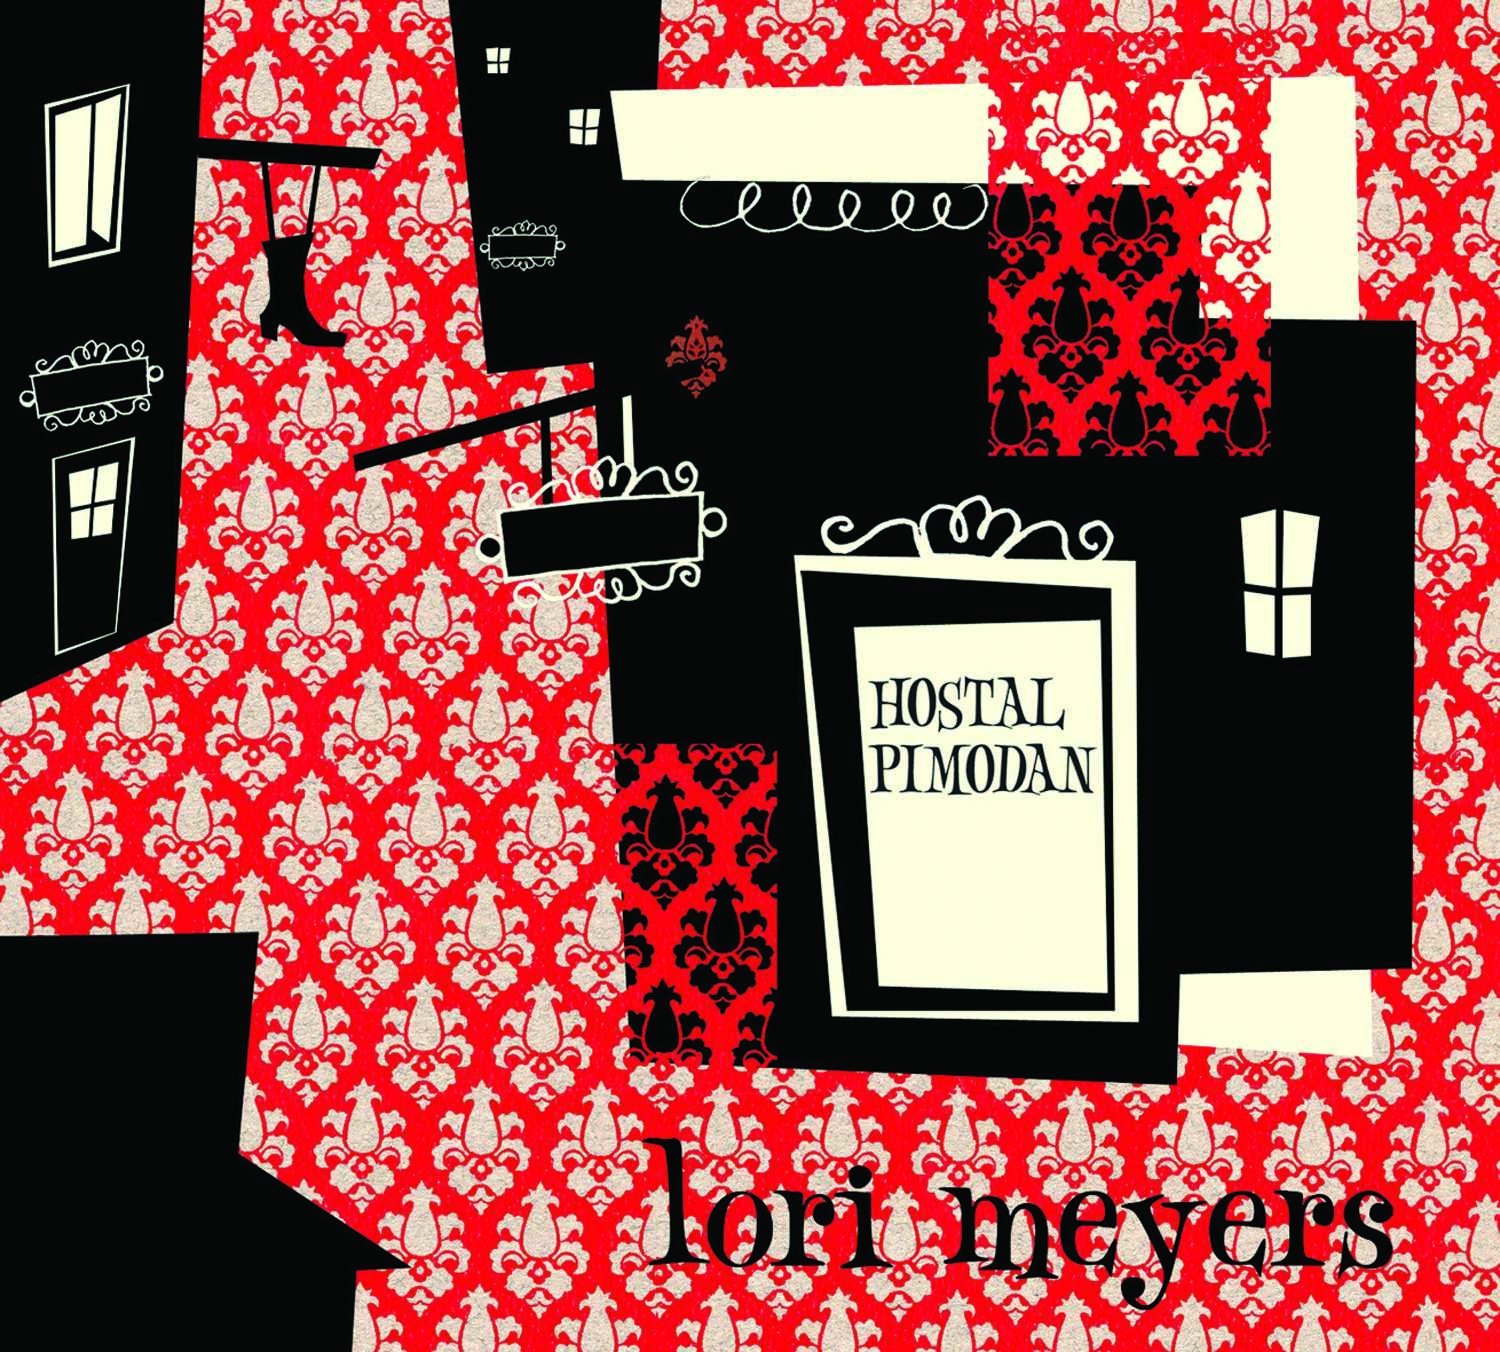 Lori Meyers "Hostal Pimodan" LP